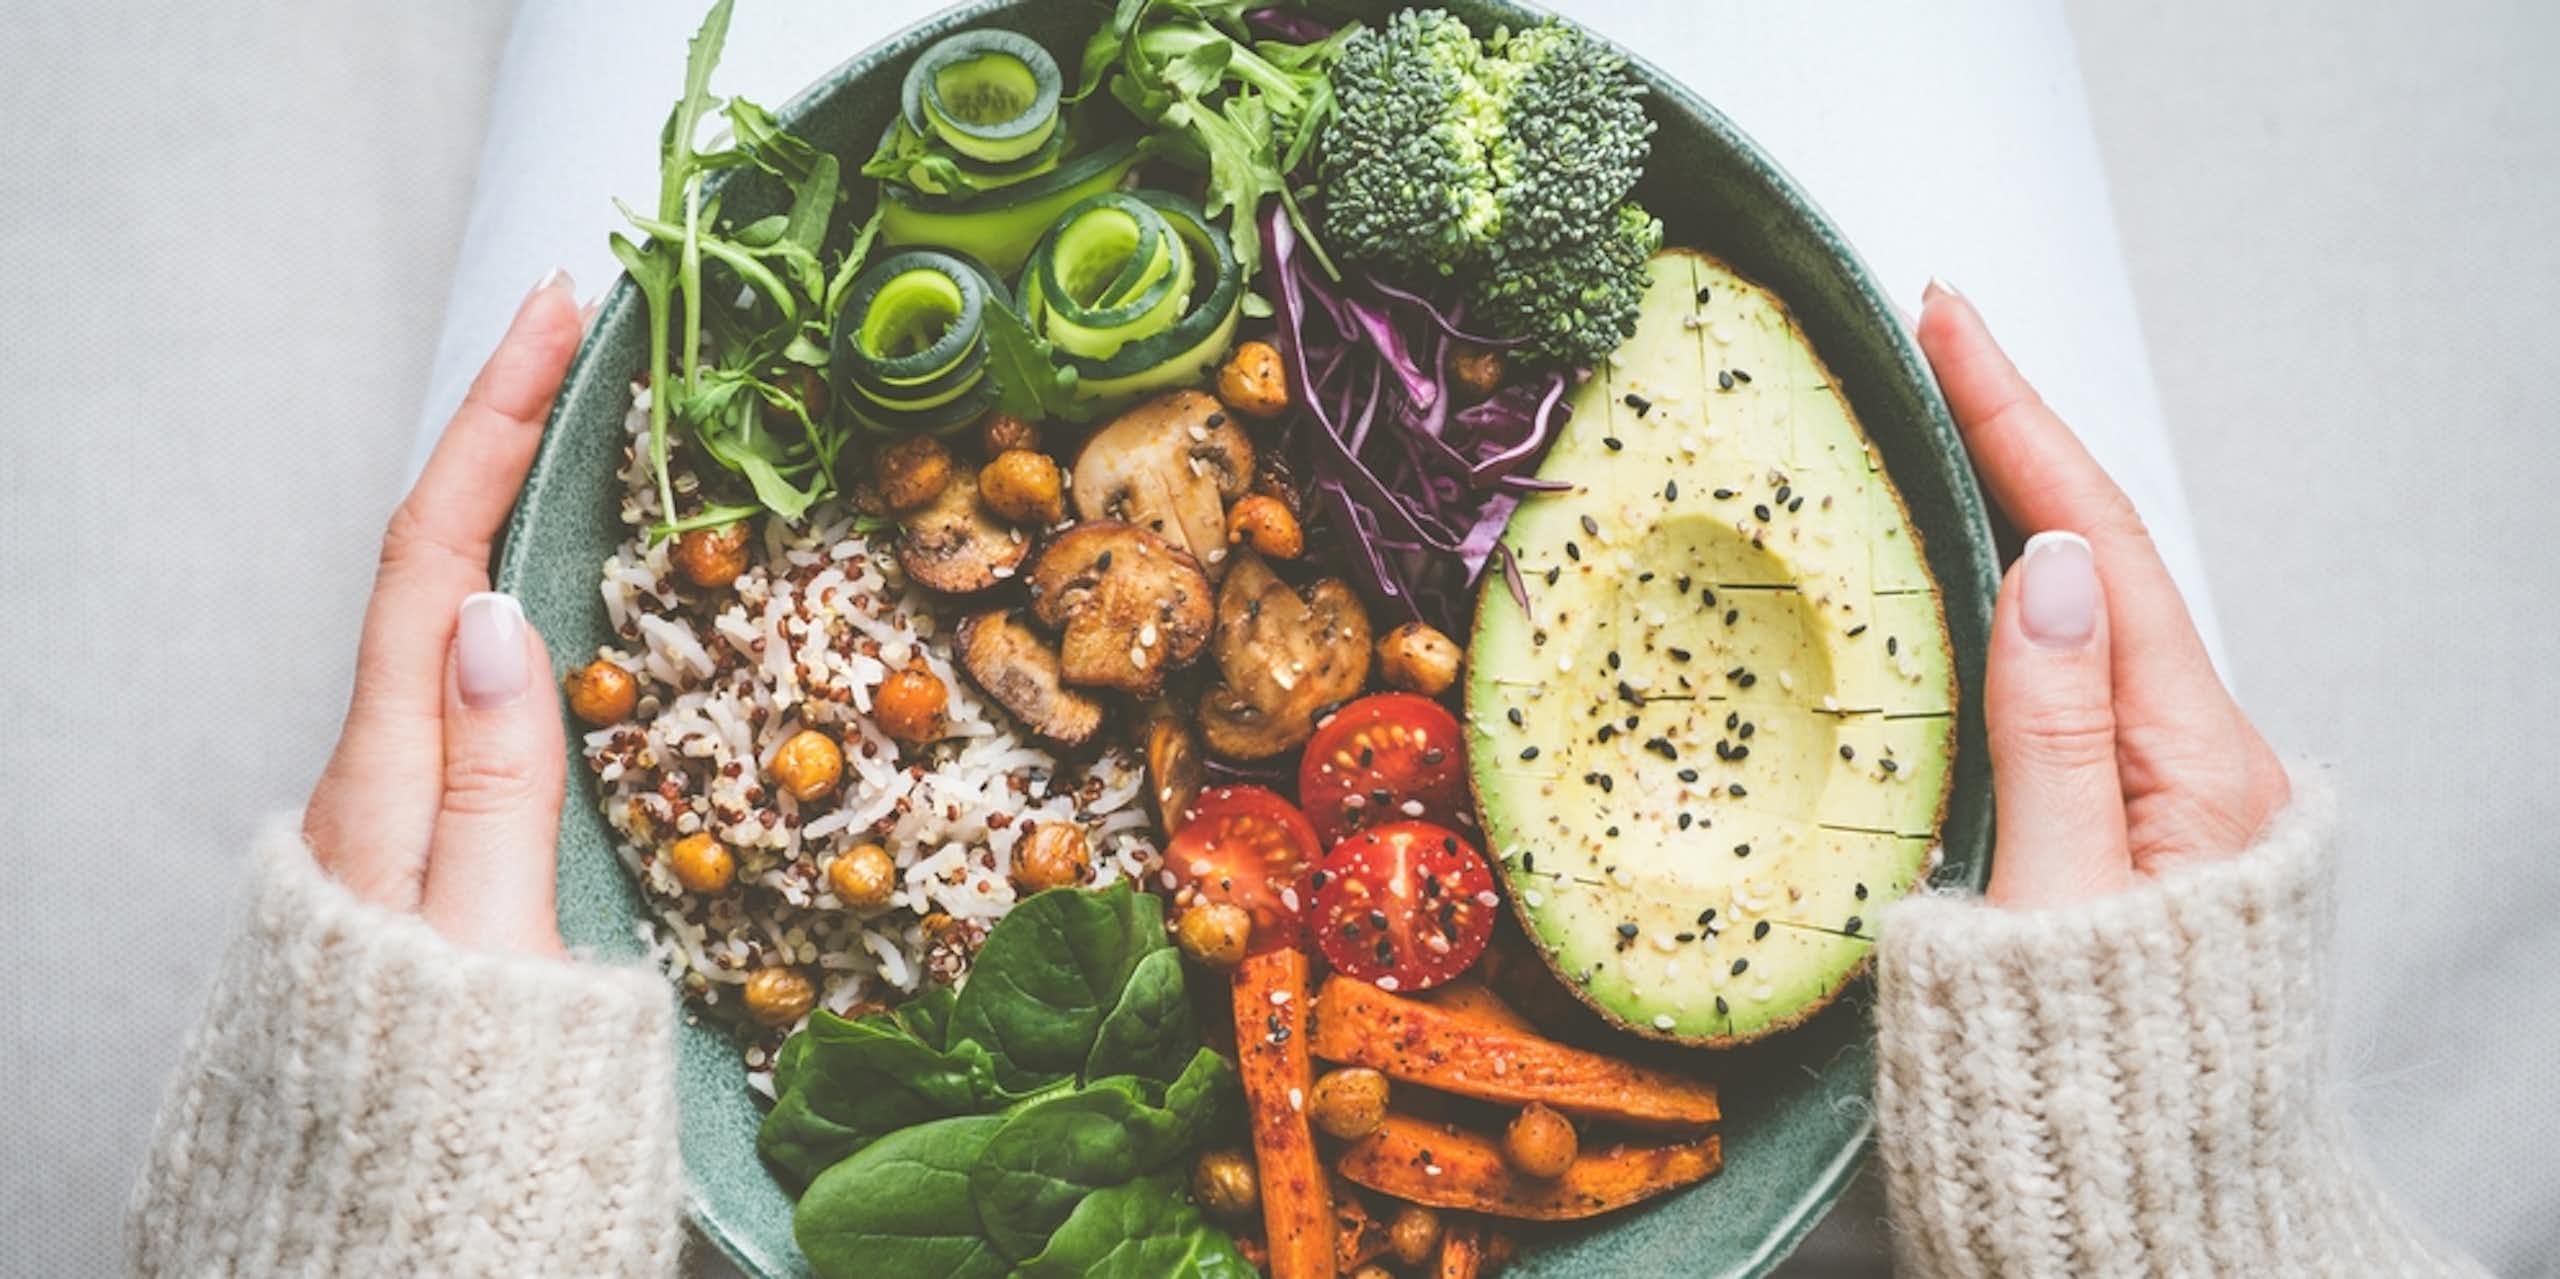 Woman holding bowl of vegan food (avocado, veggies, rice) on lap